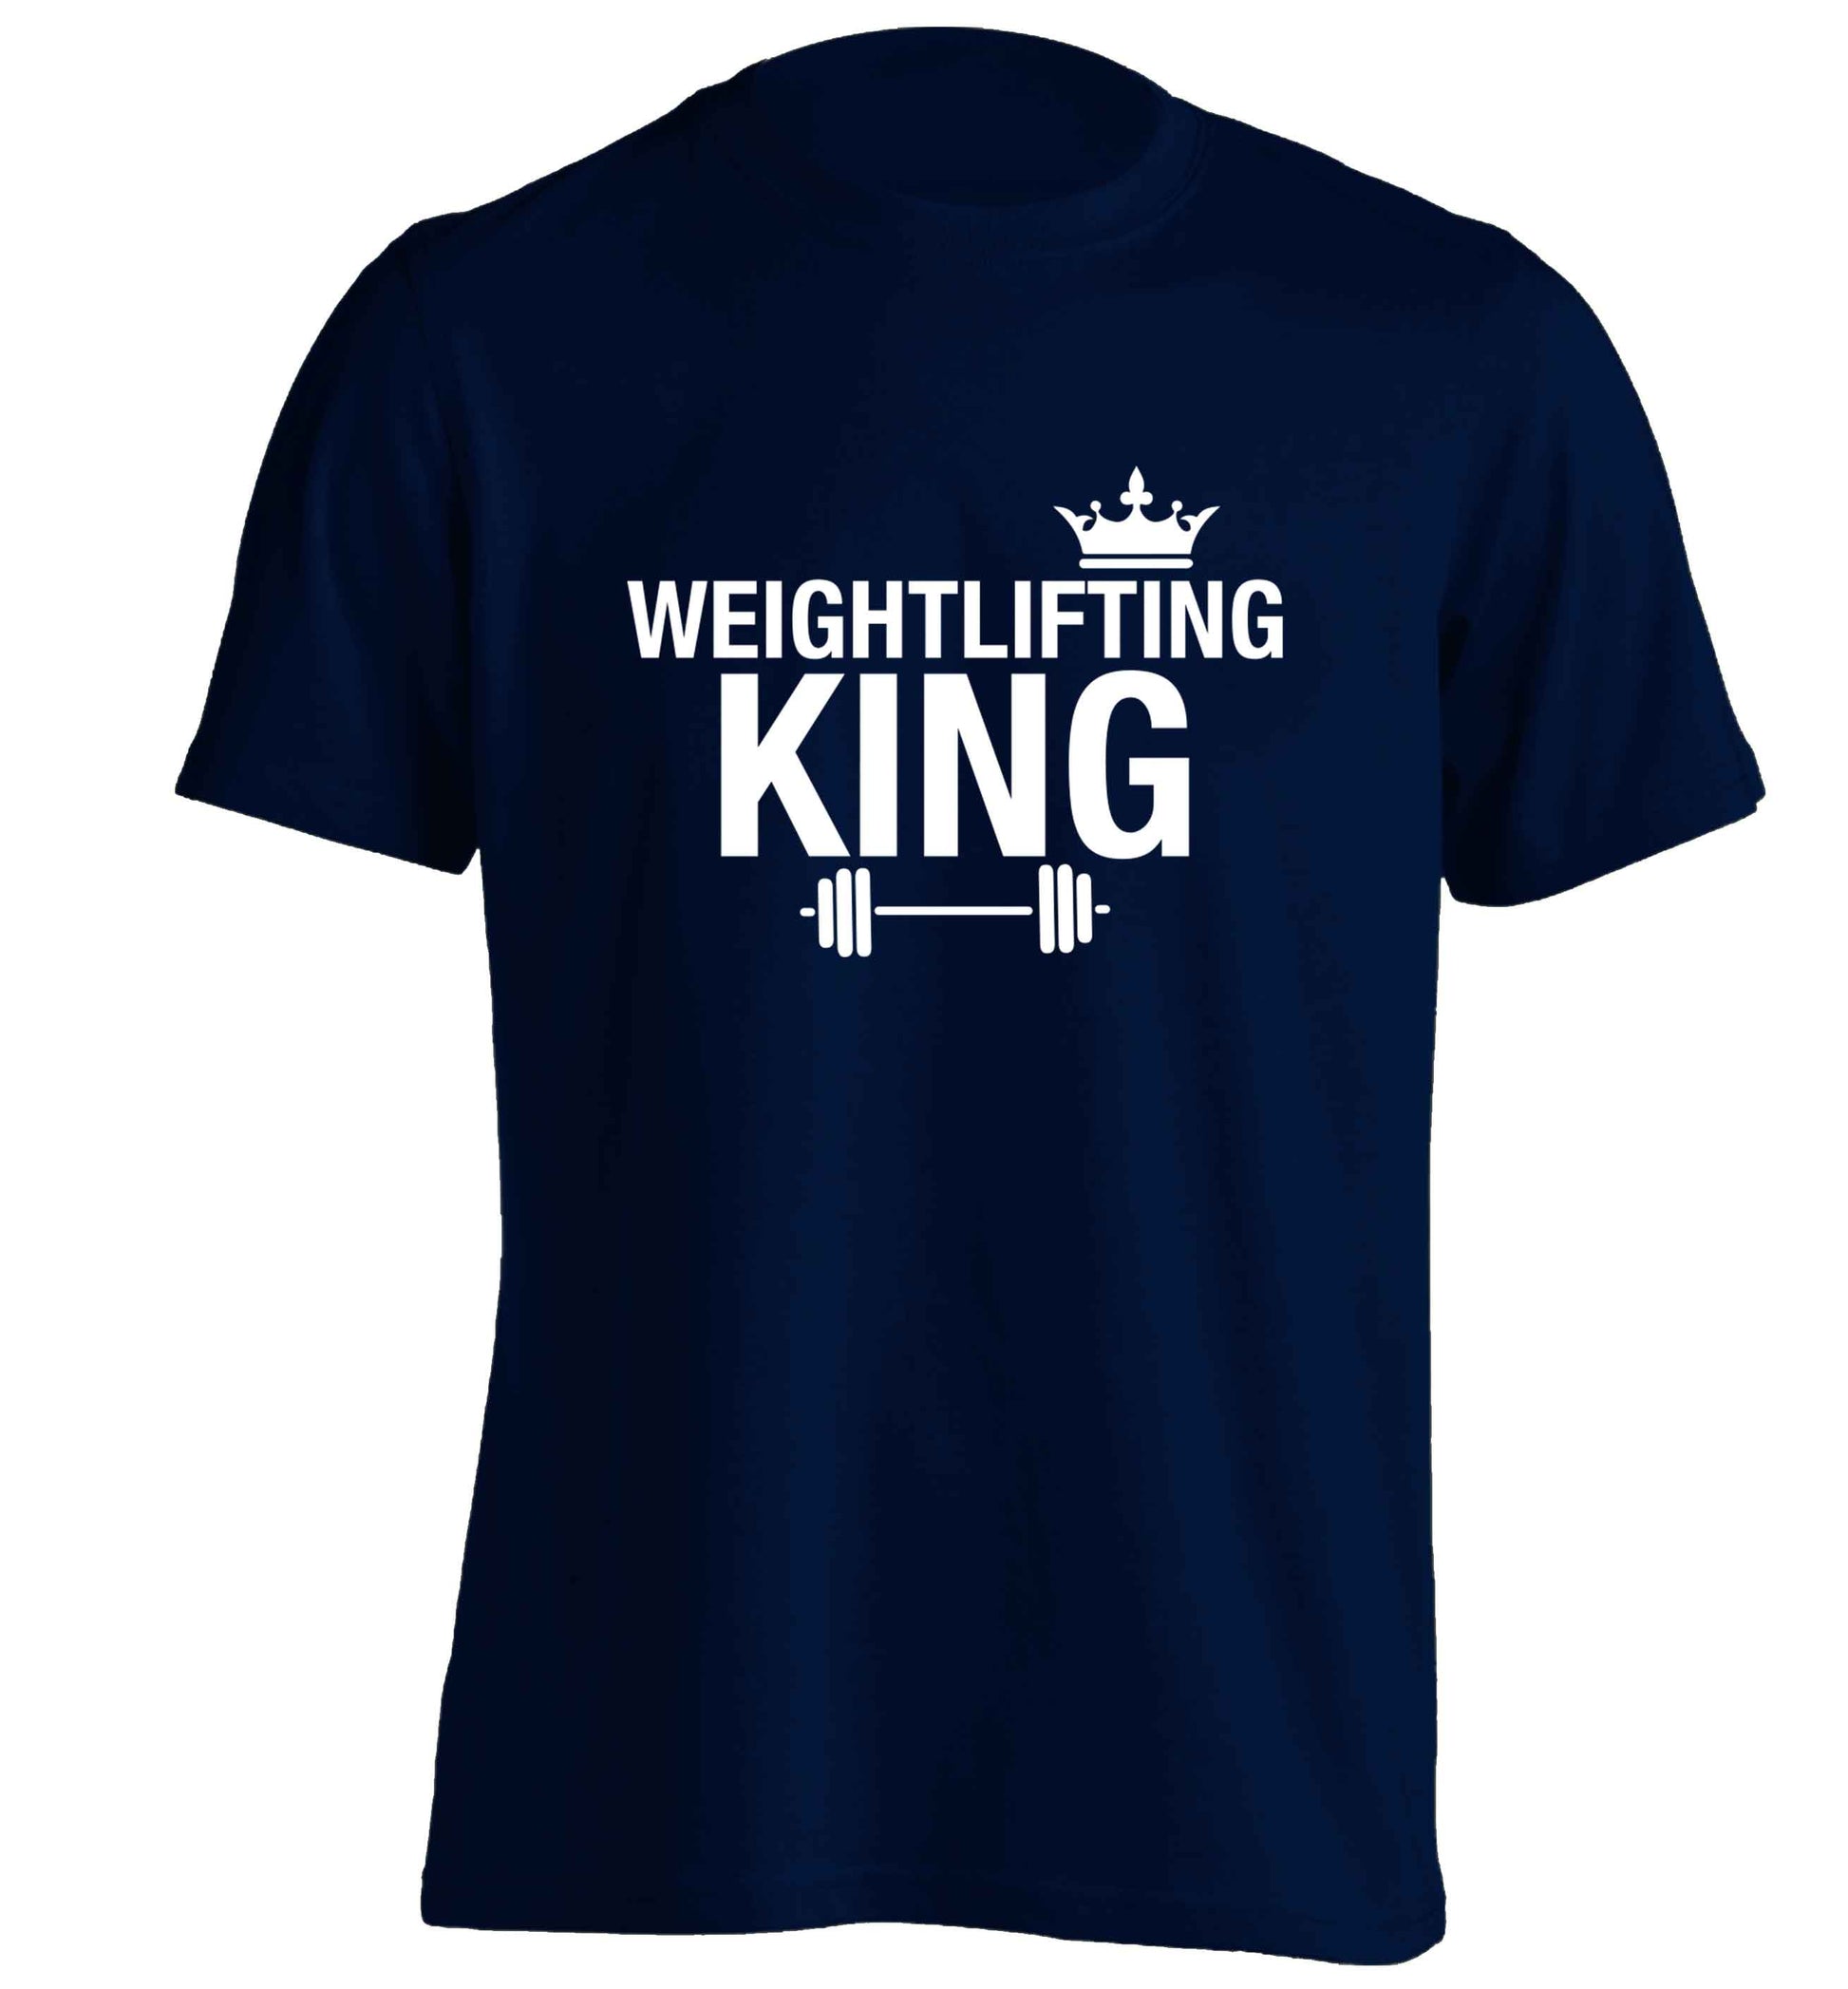 Weightlifting king adults unisex navy Tshirt 2XL